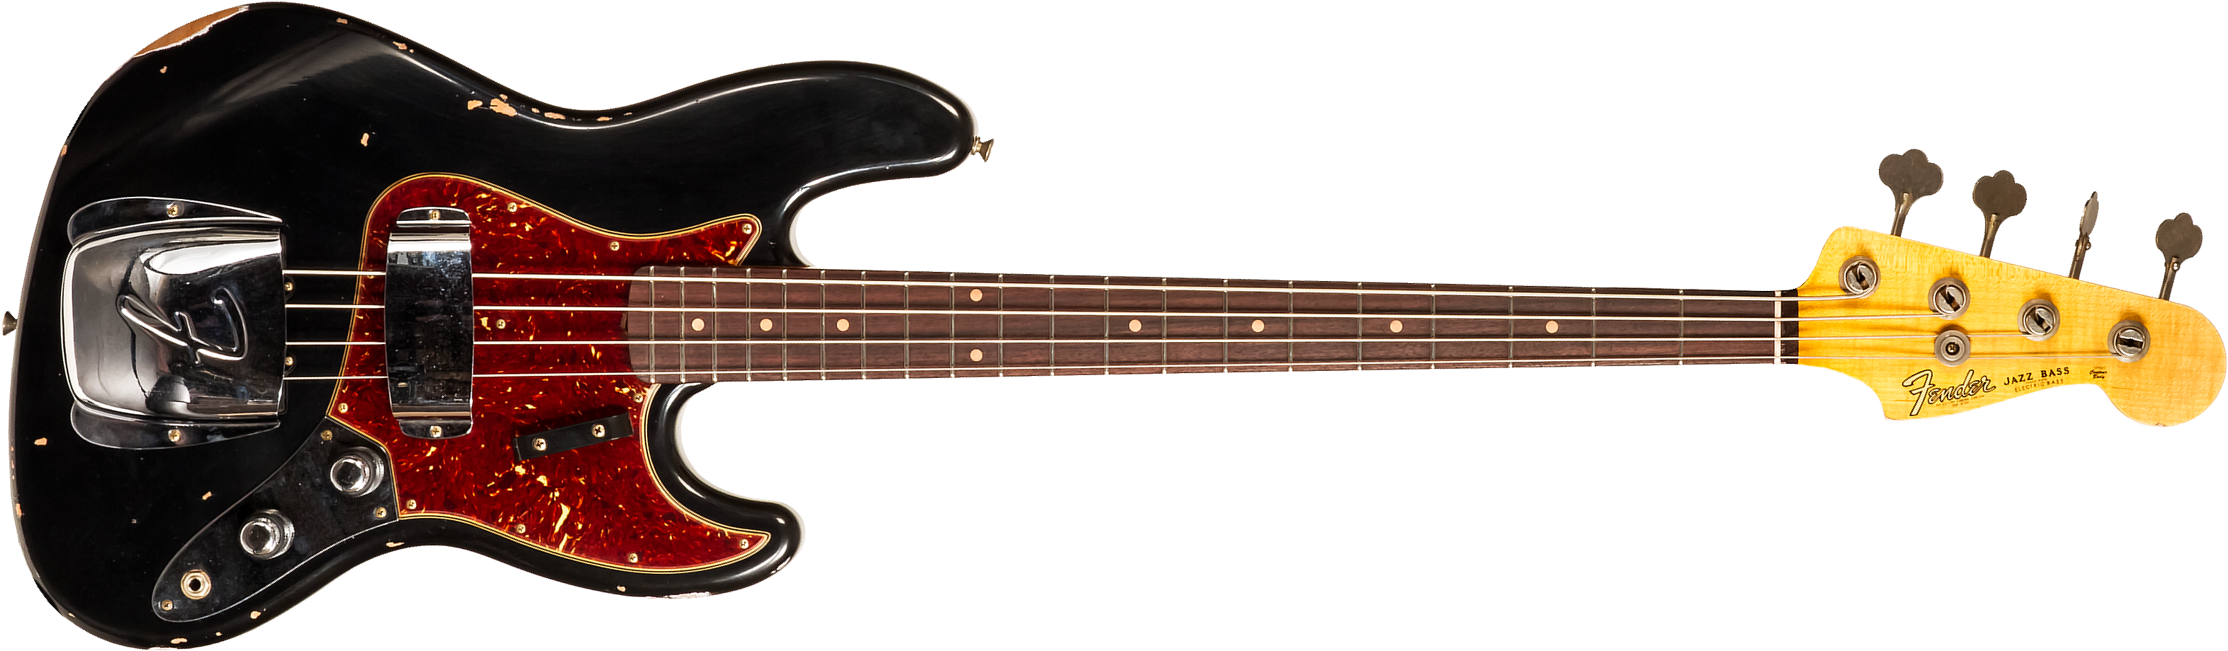 Fender Custom Shop 1962 Jazz Bass #CZ569677 - relic aged black